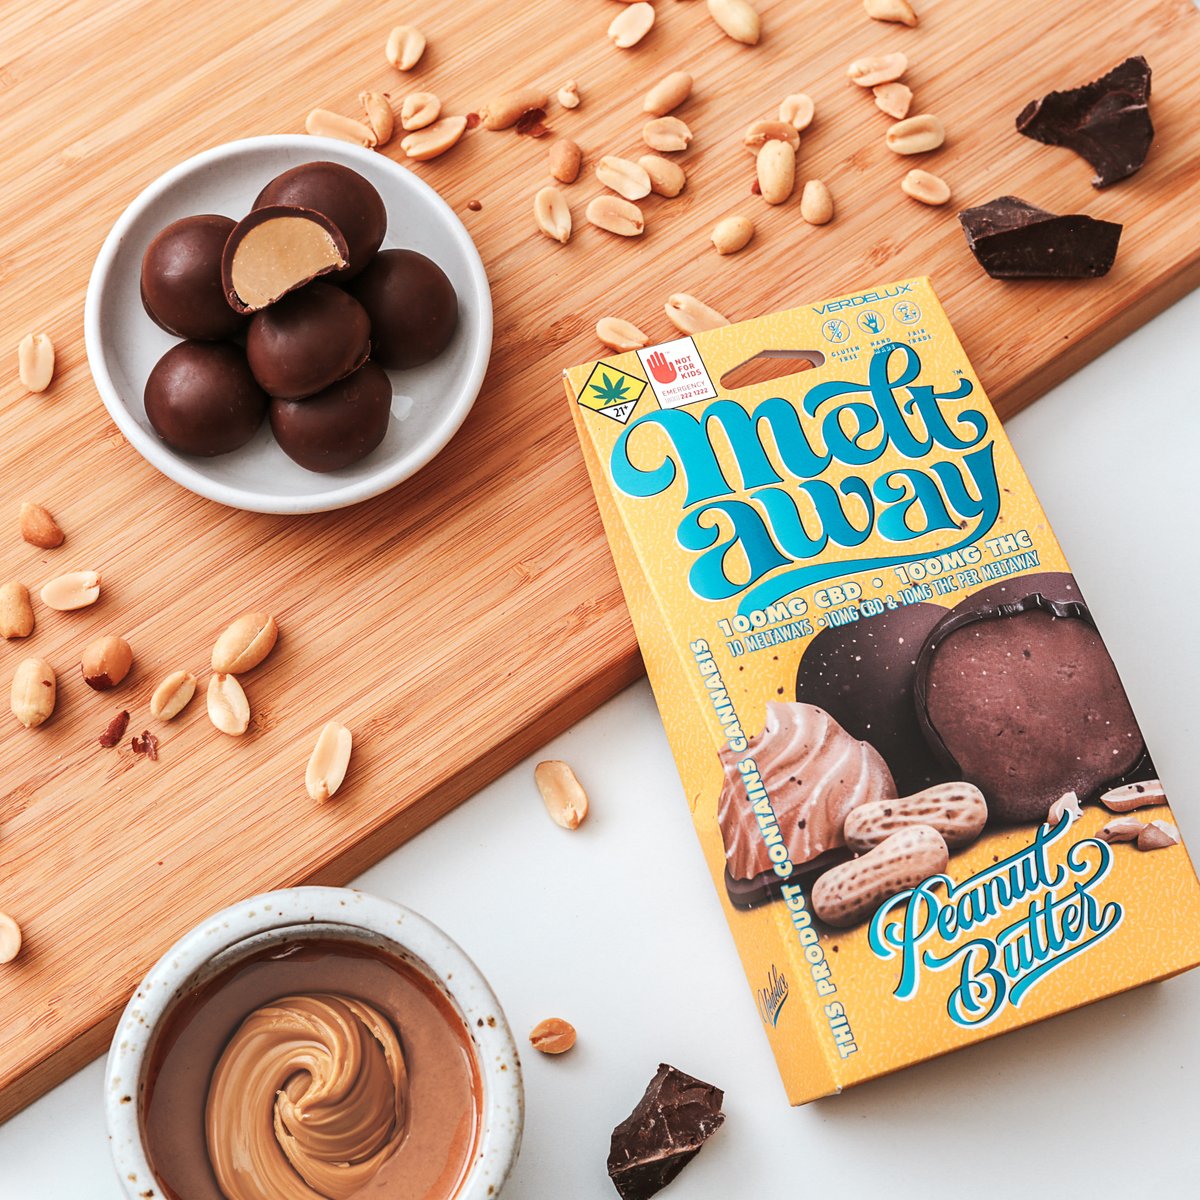 Creamy dreamy Meltaway peanut butter truffles 🥜 Doesn't get much better than these amazing delights!

#verdelux #FridayFeeling #seattle #spokane #redmond #kirkland #chocolate #peanutbuttertruffles